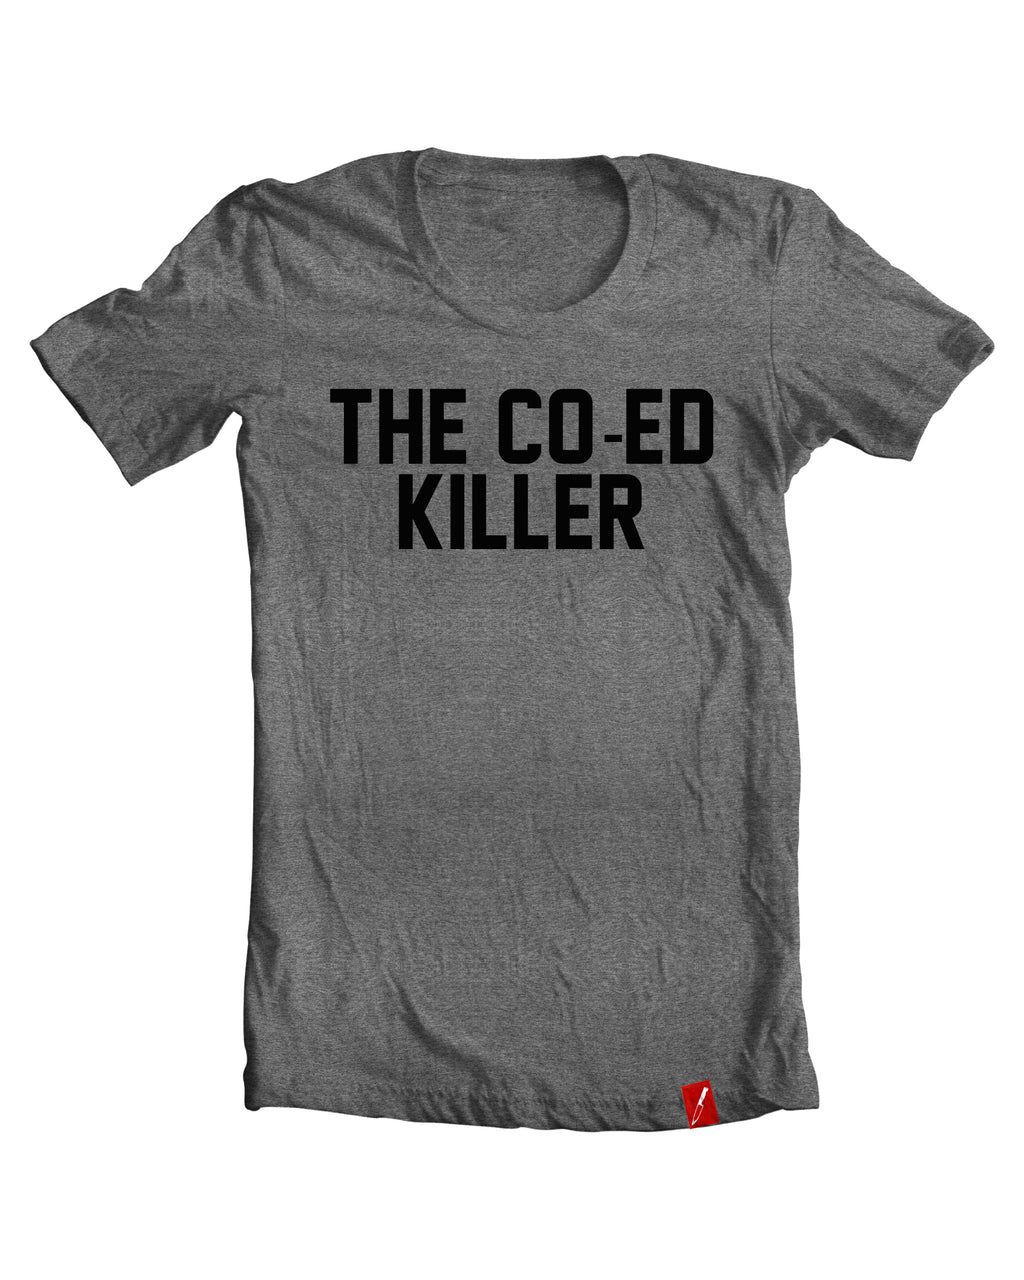 THE CO-ED KILLER